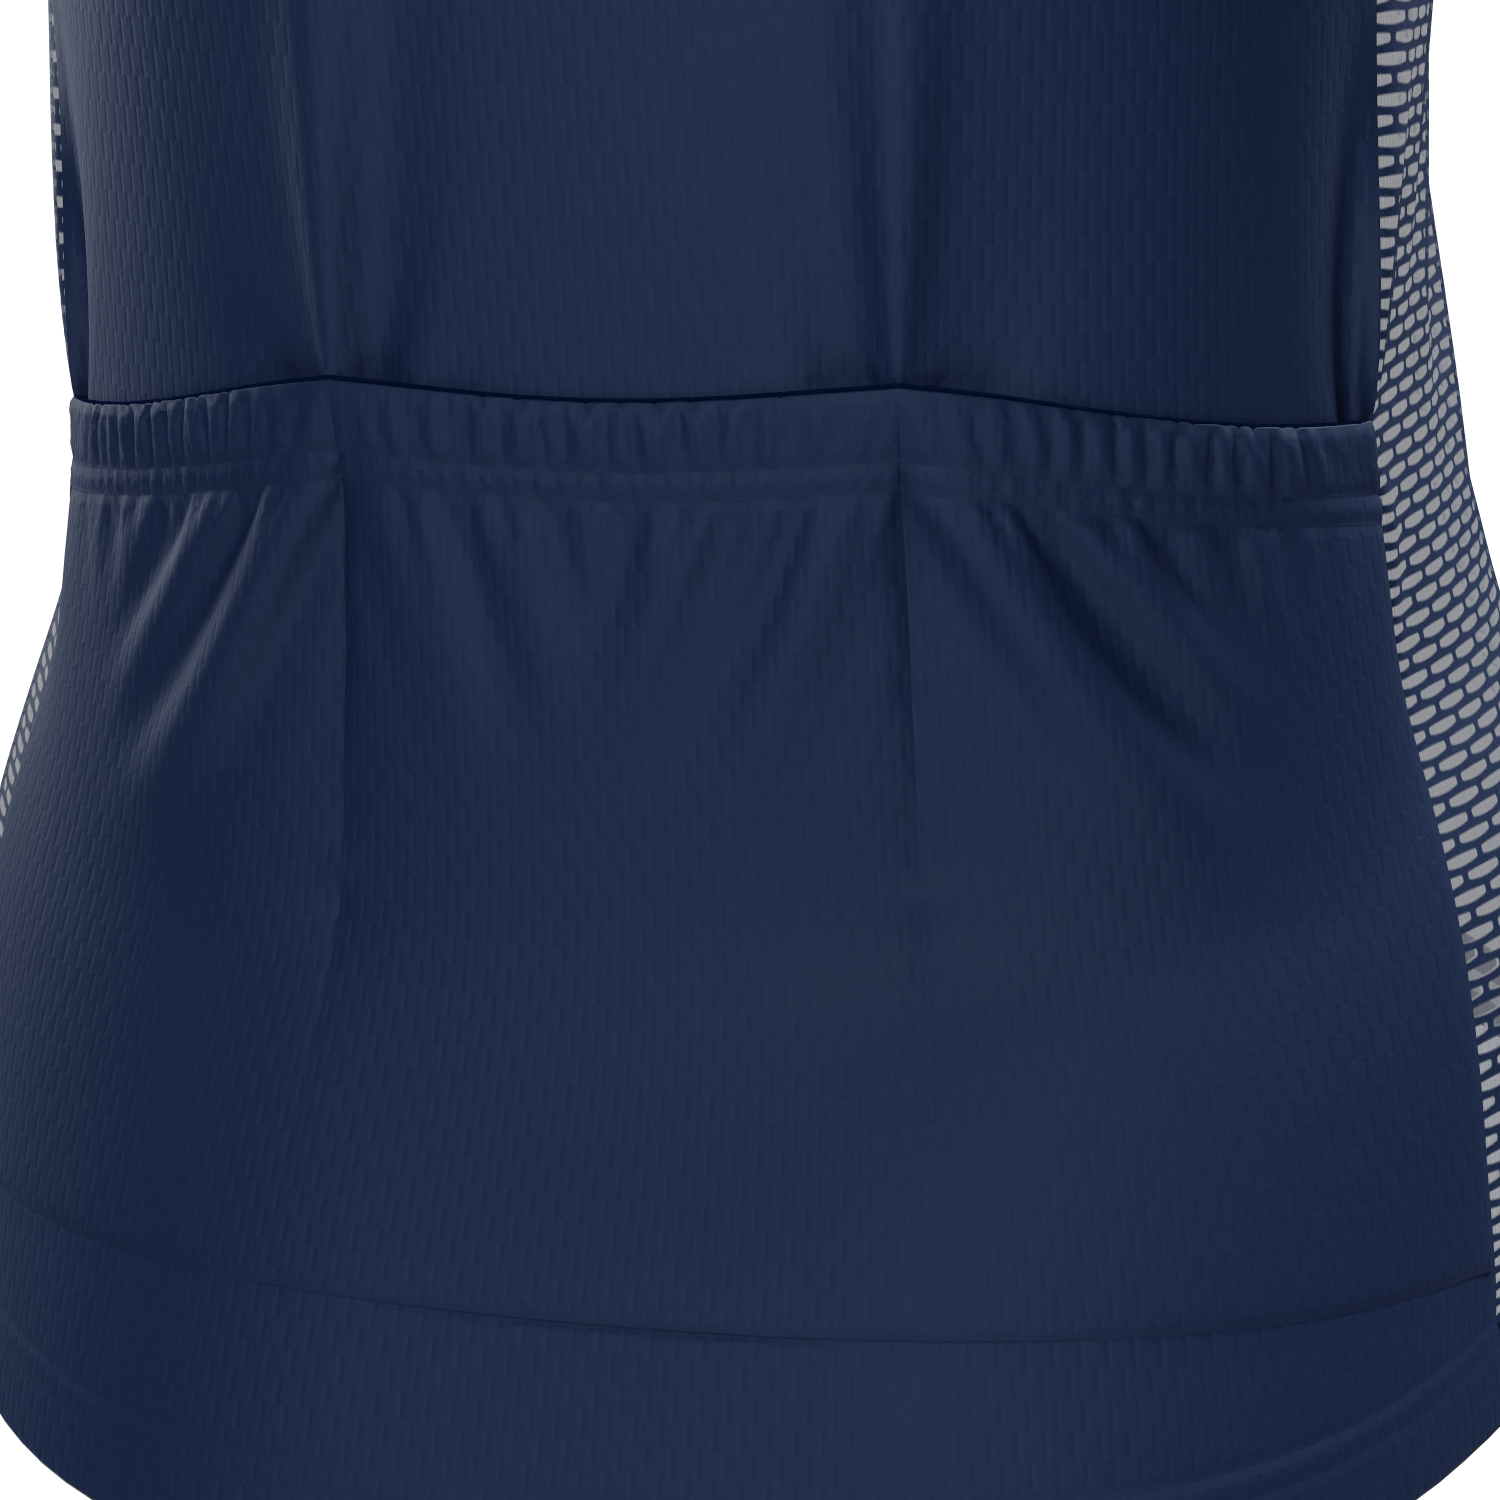 Women's Tennessee Football Short Sleeve Cycling Jersey